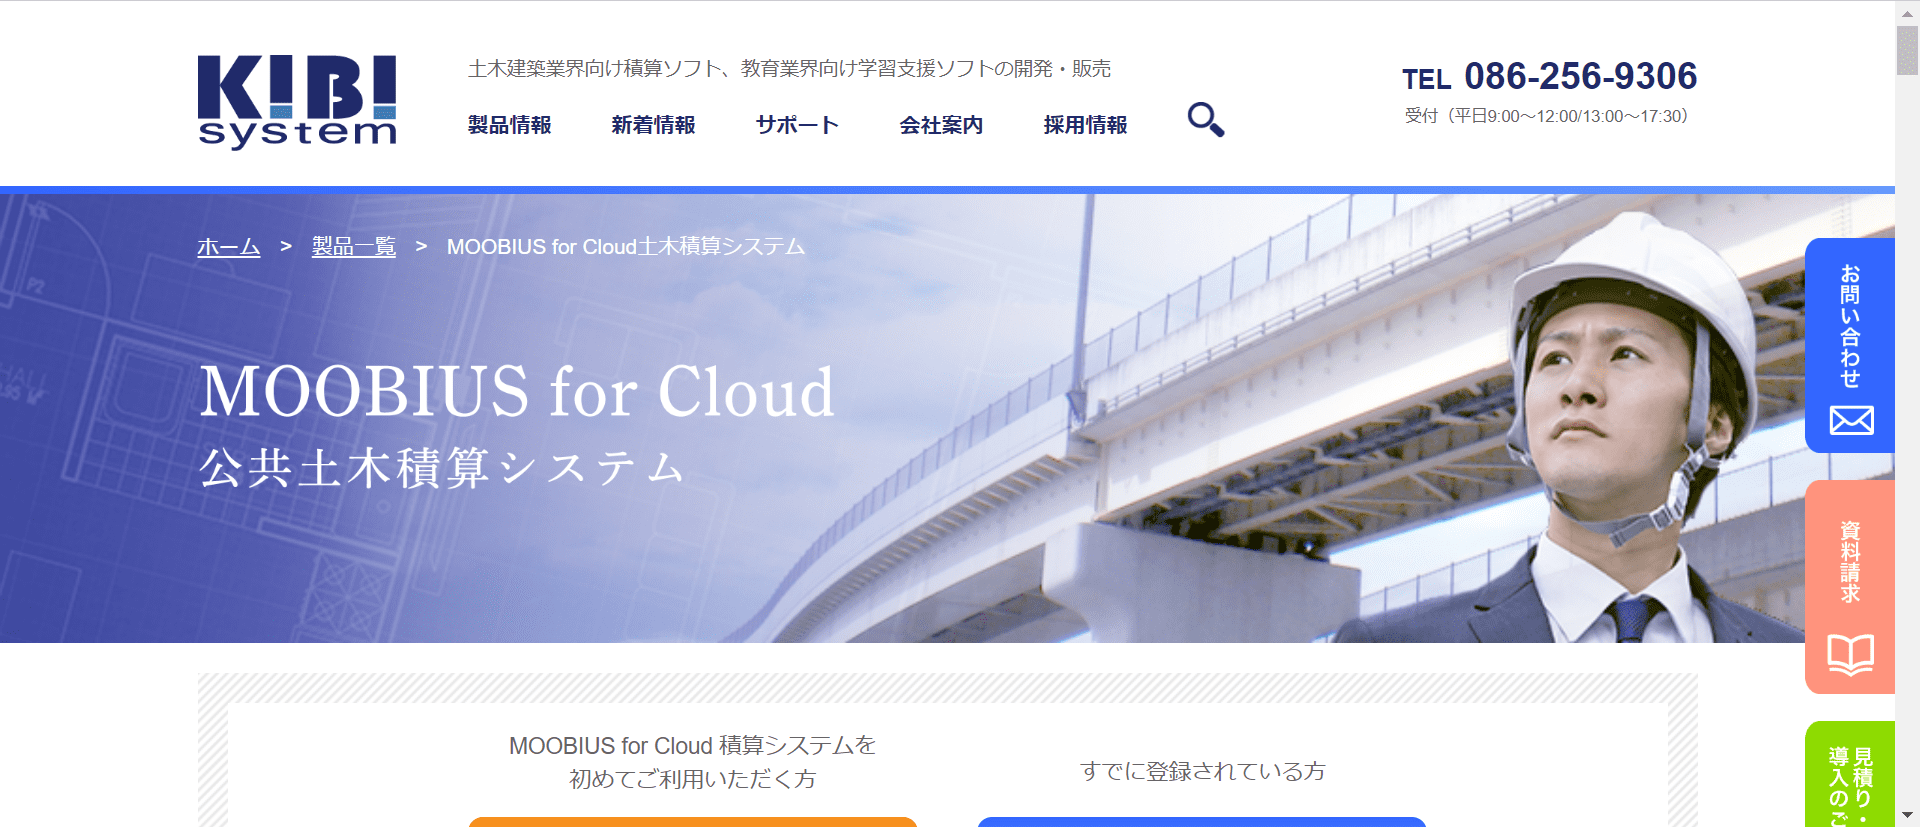 MOOBIUS for Cloud 公共土木積算システム